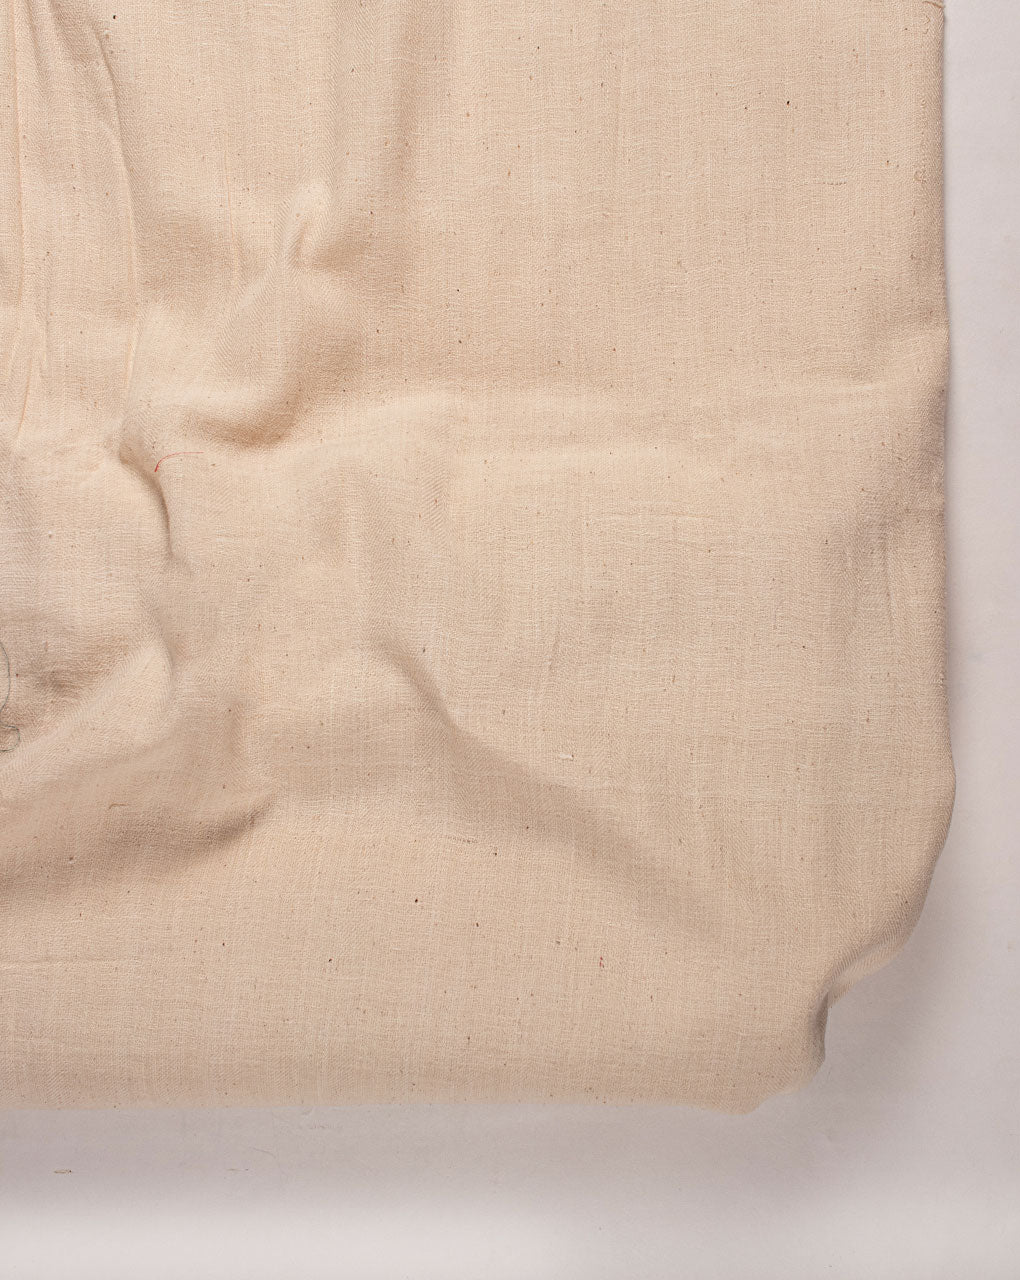 Handwoven Organic Pure Handloom Cotton Fabric